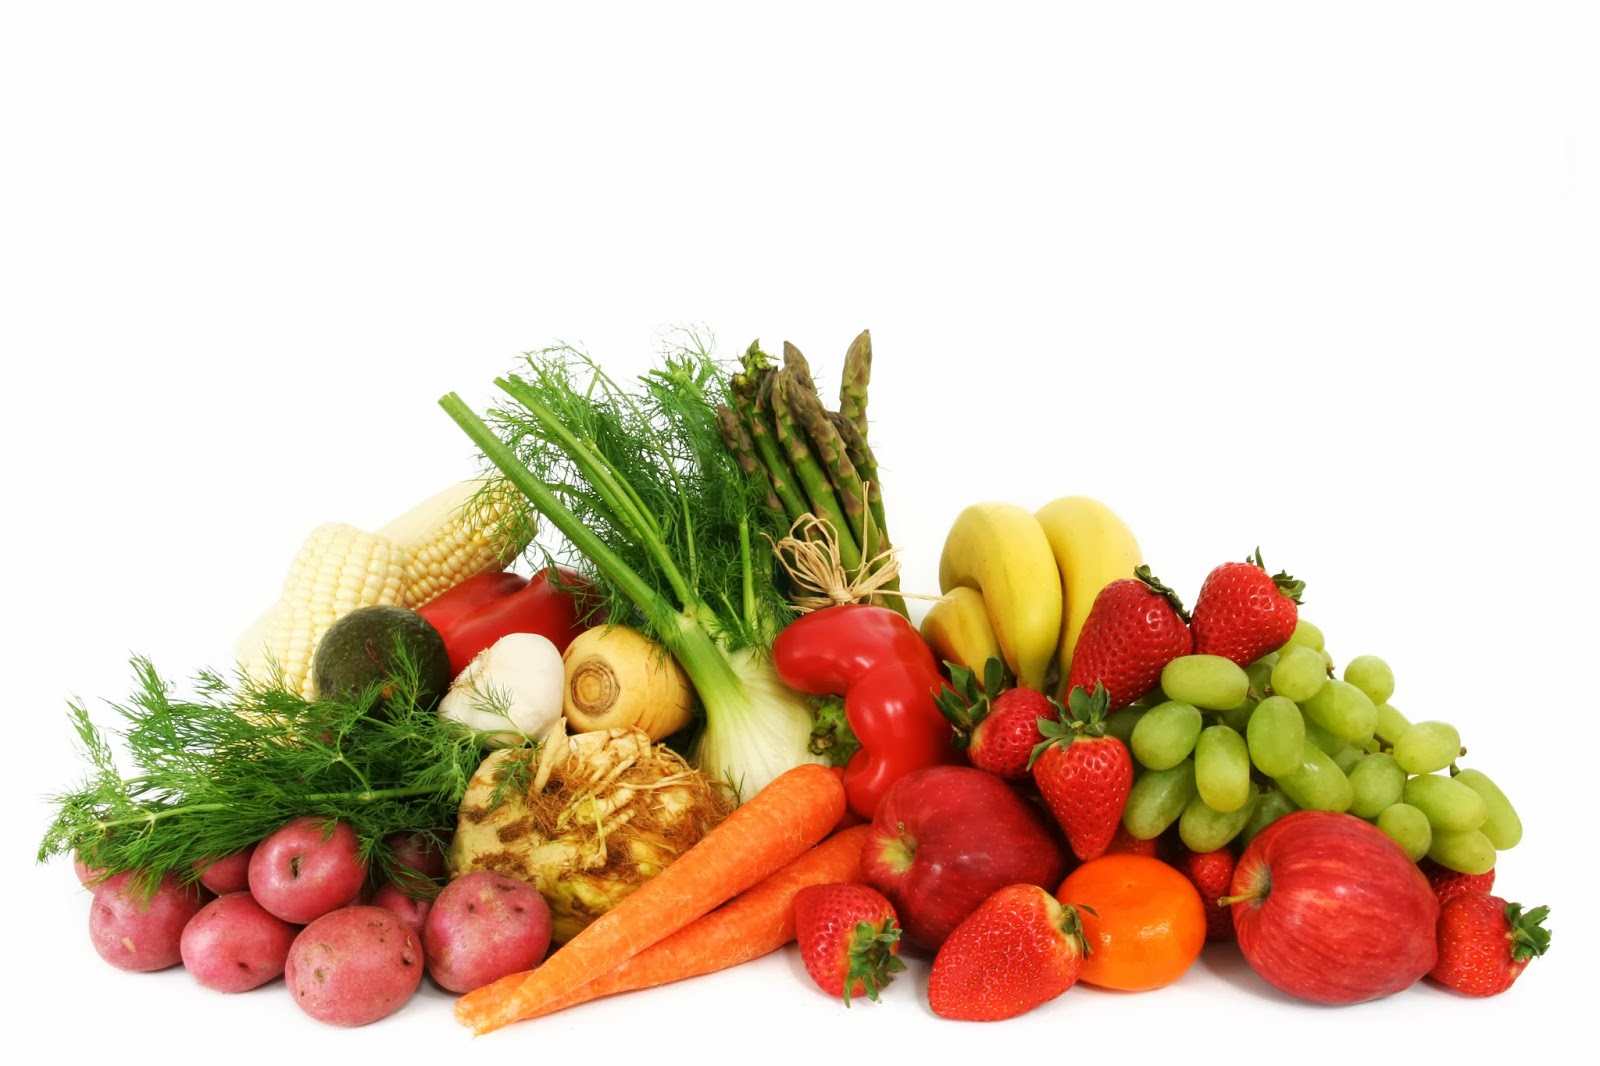 Similar Great Desktop HD Wallpaper Of Fruits And Vegetables